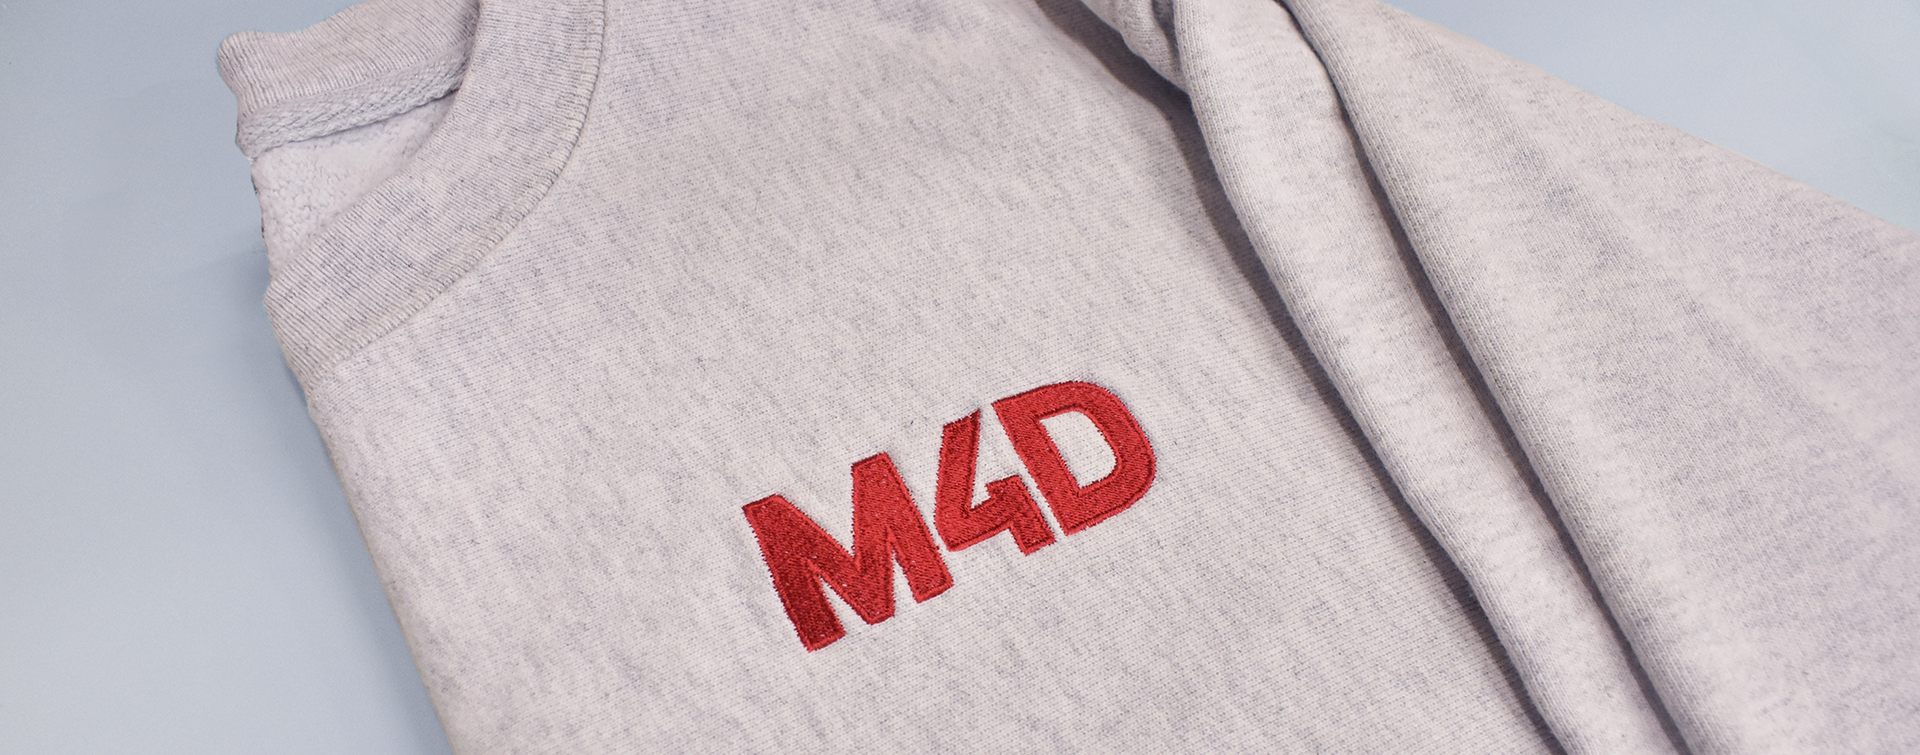 m4d-promo-grey